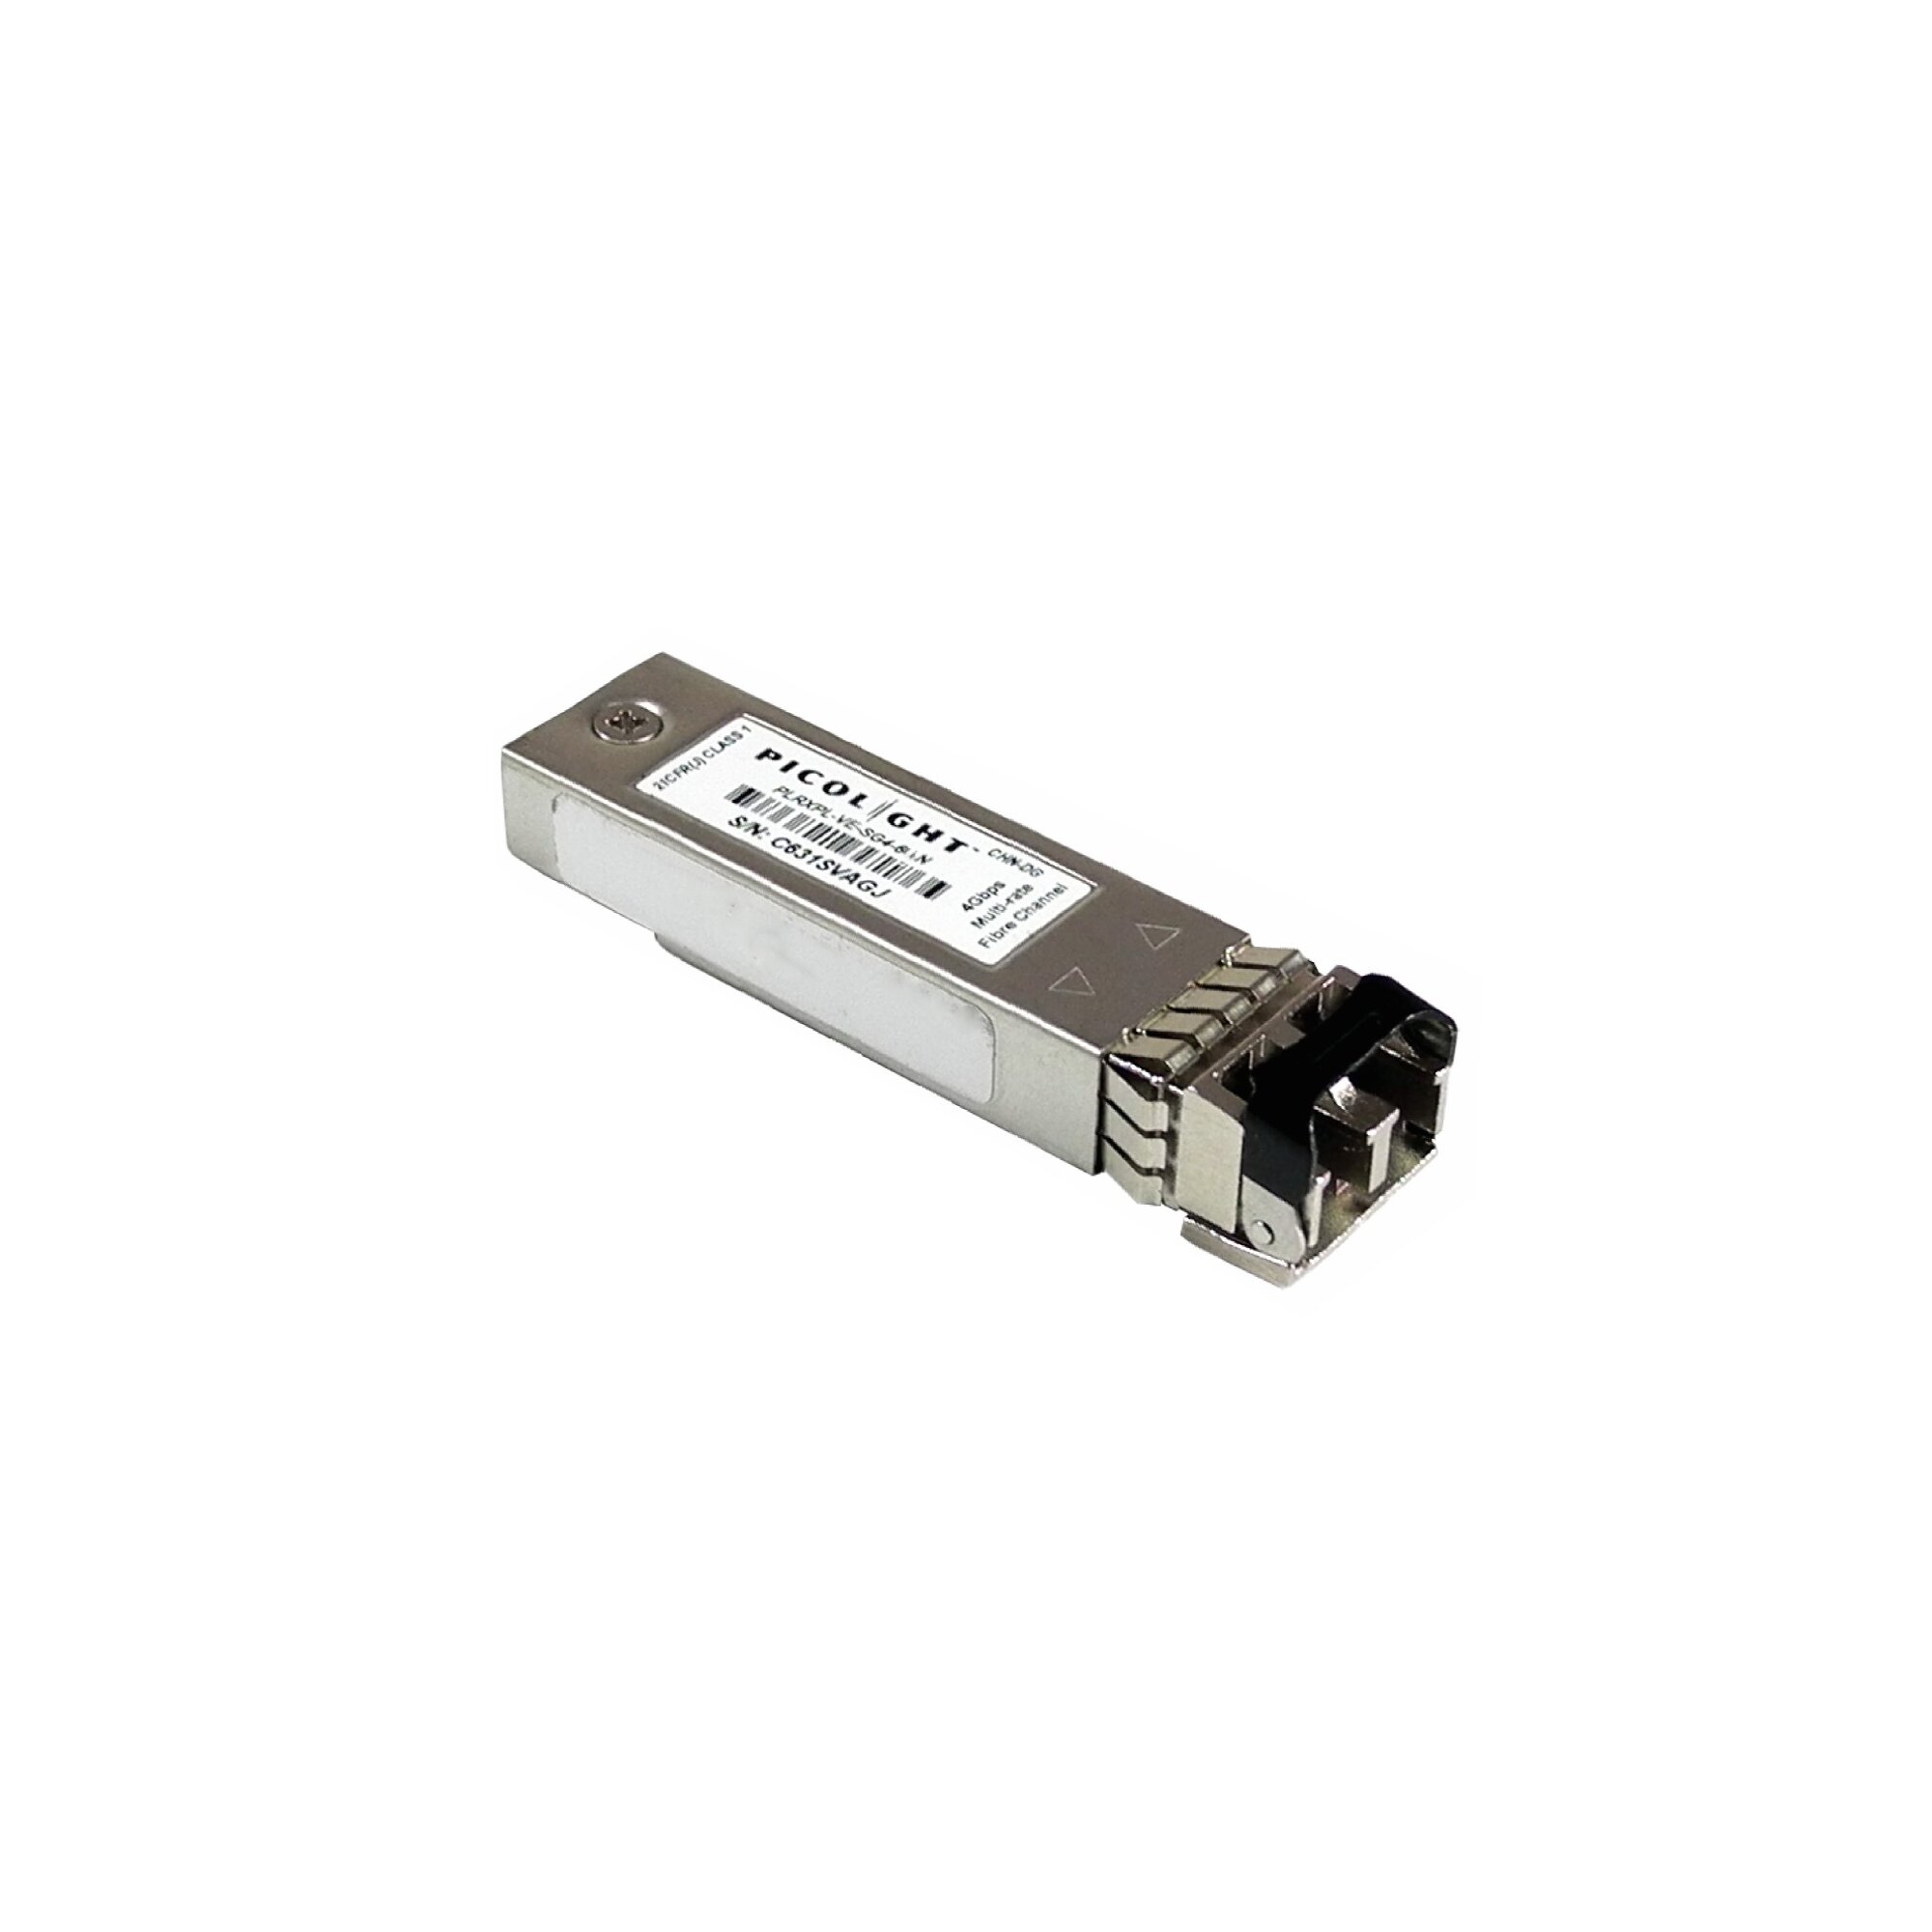 JDSU Transceiver JDSU compatible PLRXPL-VE-SG4-62-N 1000BASE-SX SFP 